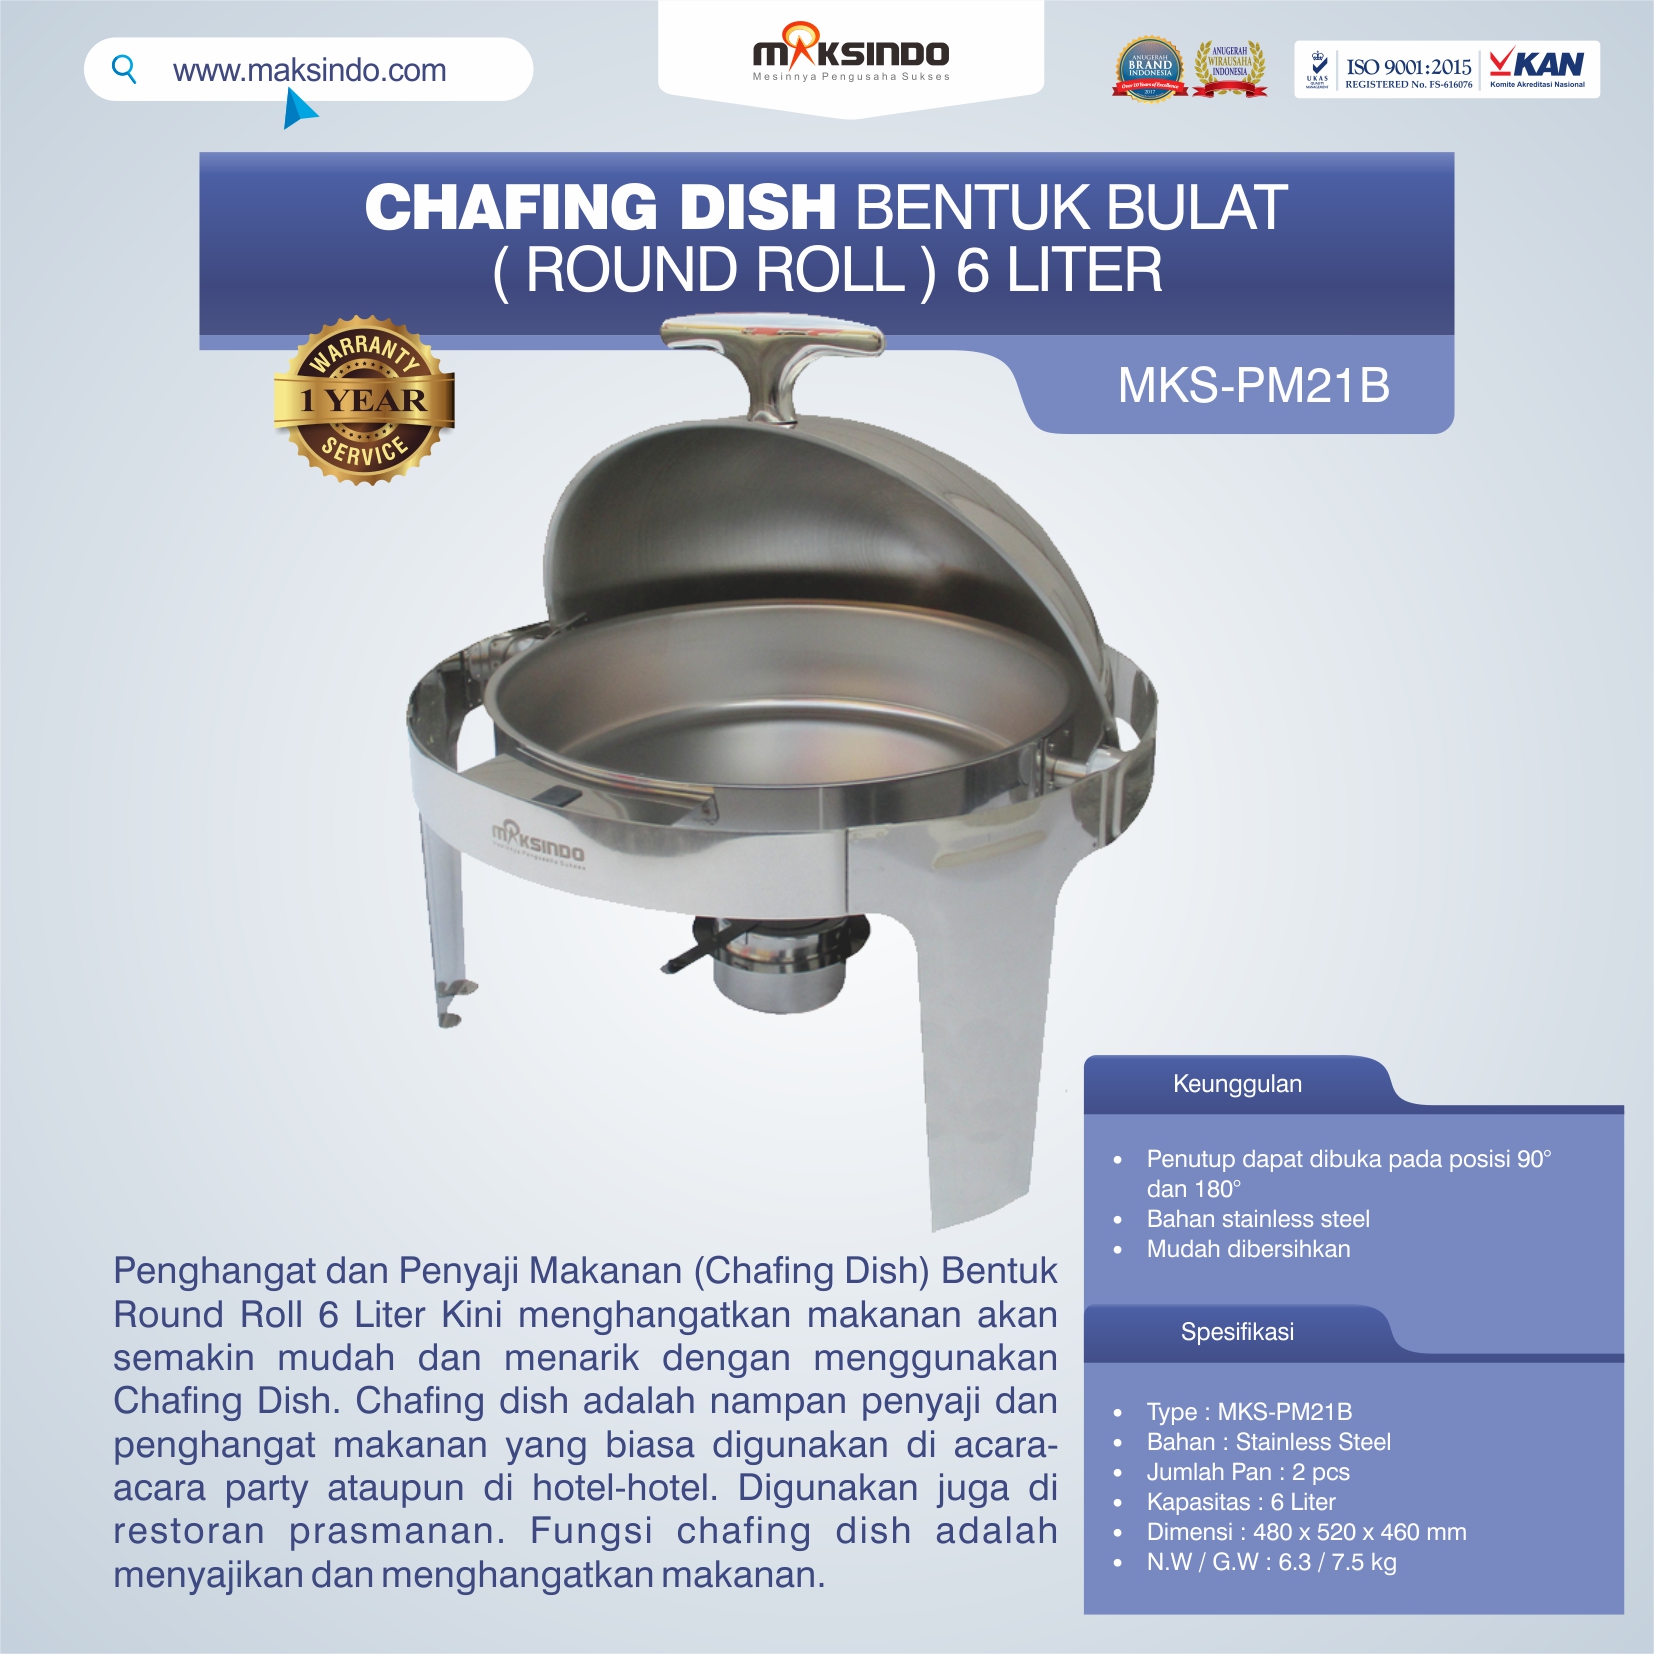 Jual Chafing Dish Bentuk Bulat (Round Roll) 6 Liter di Tangerang